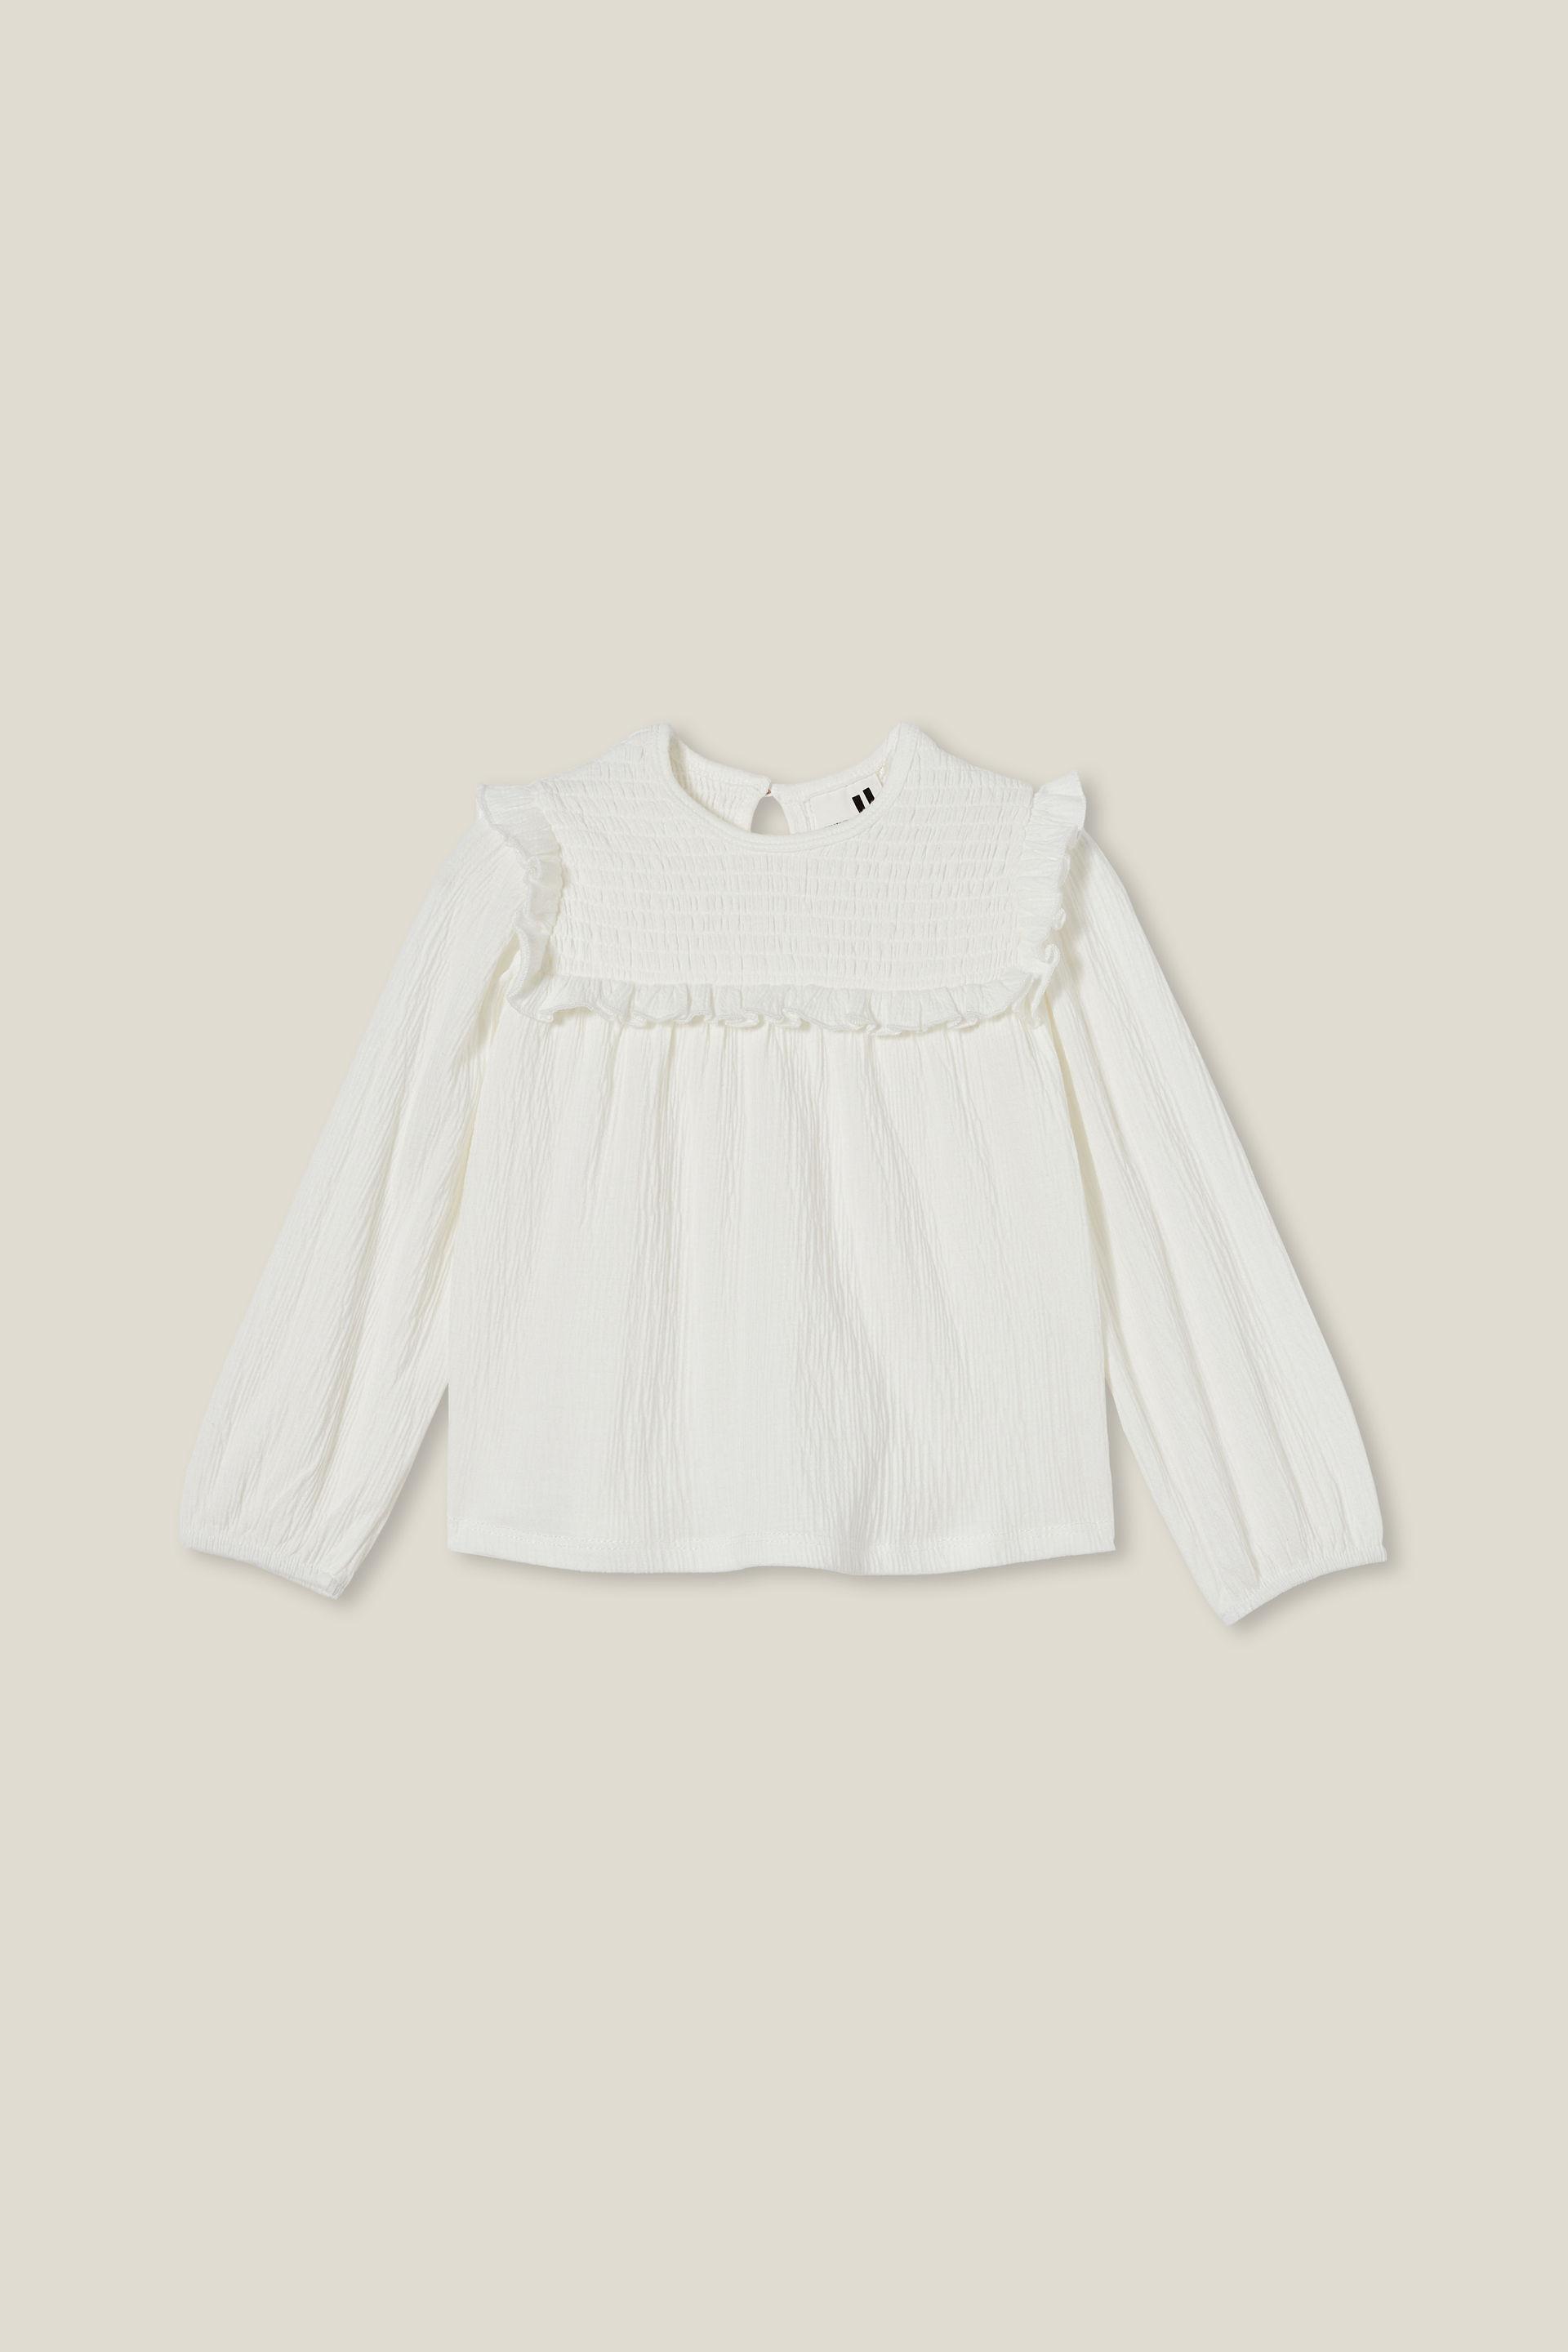 Cotton On Kids - Claire Long Sleeve Top - Vanilla